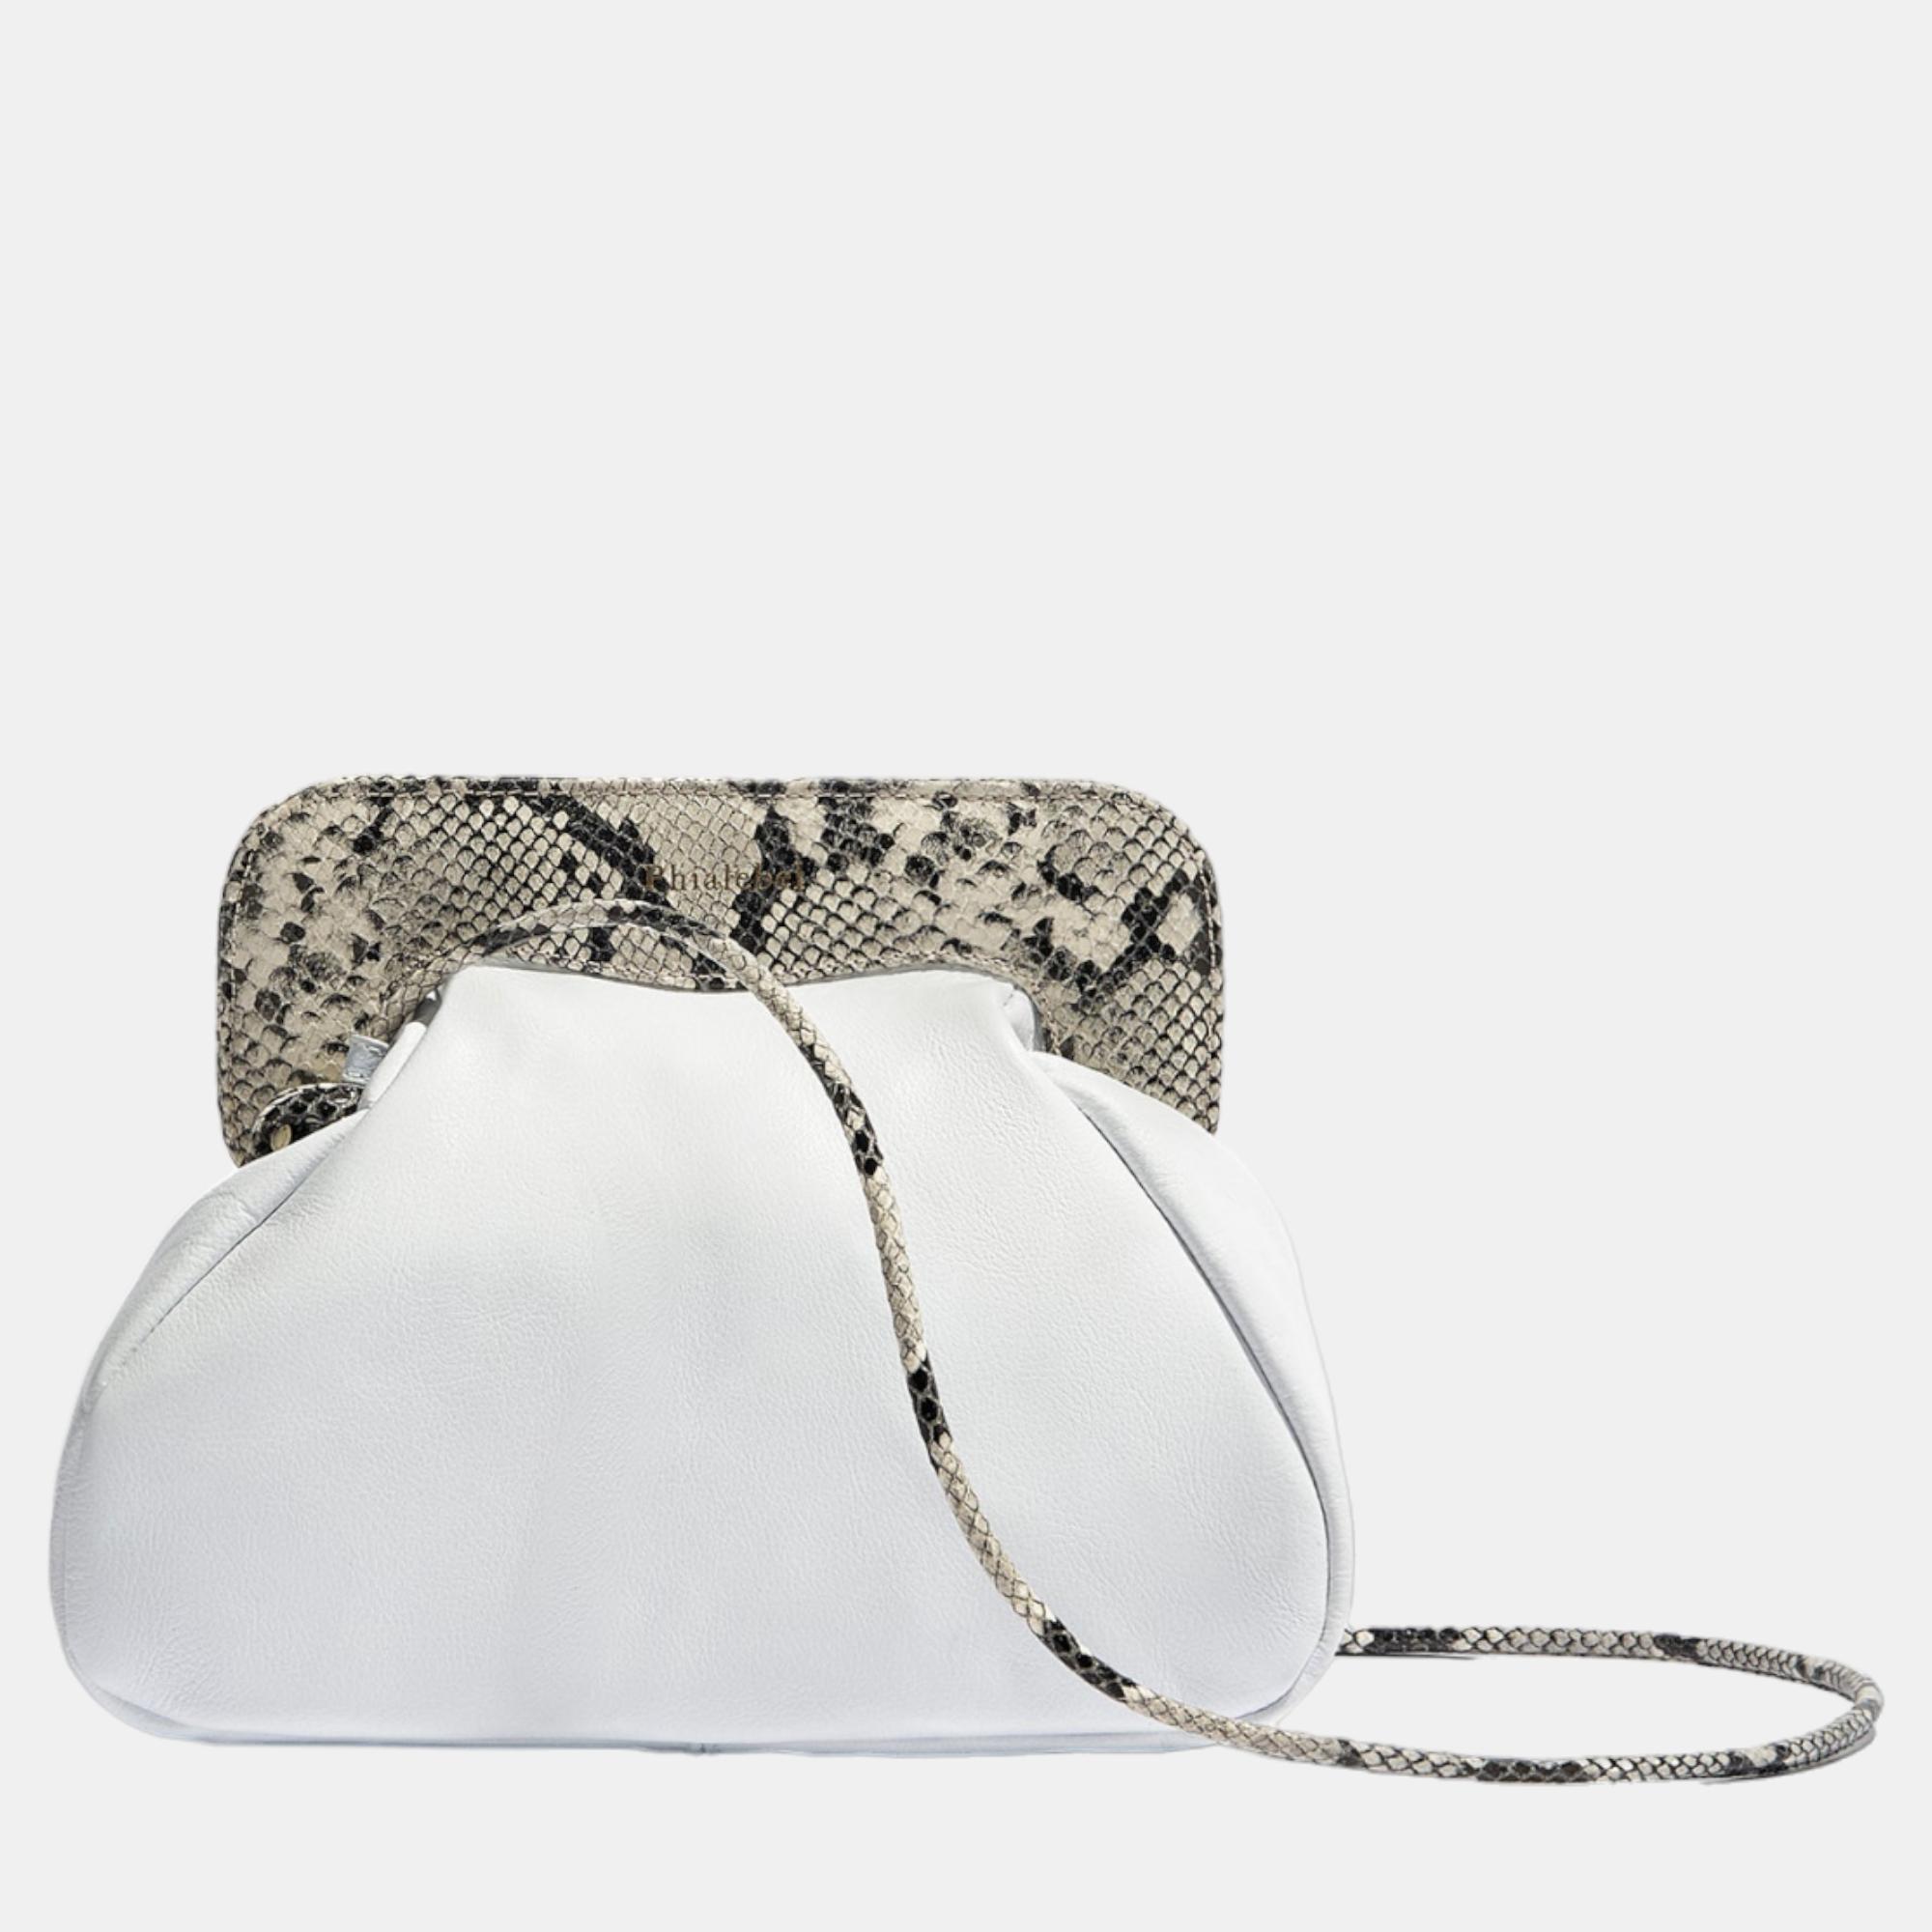 Phialebel Constanza White & Python Print Leather Shoulder Bag